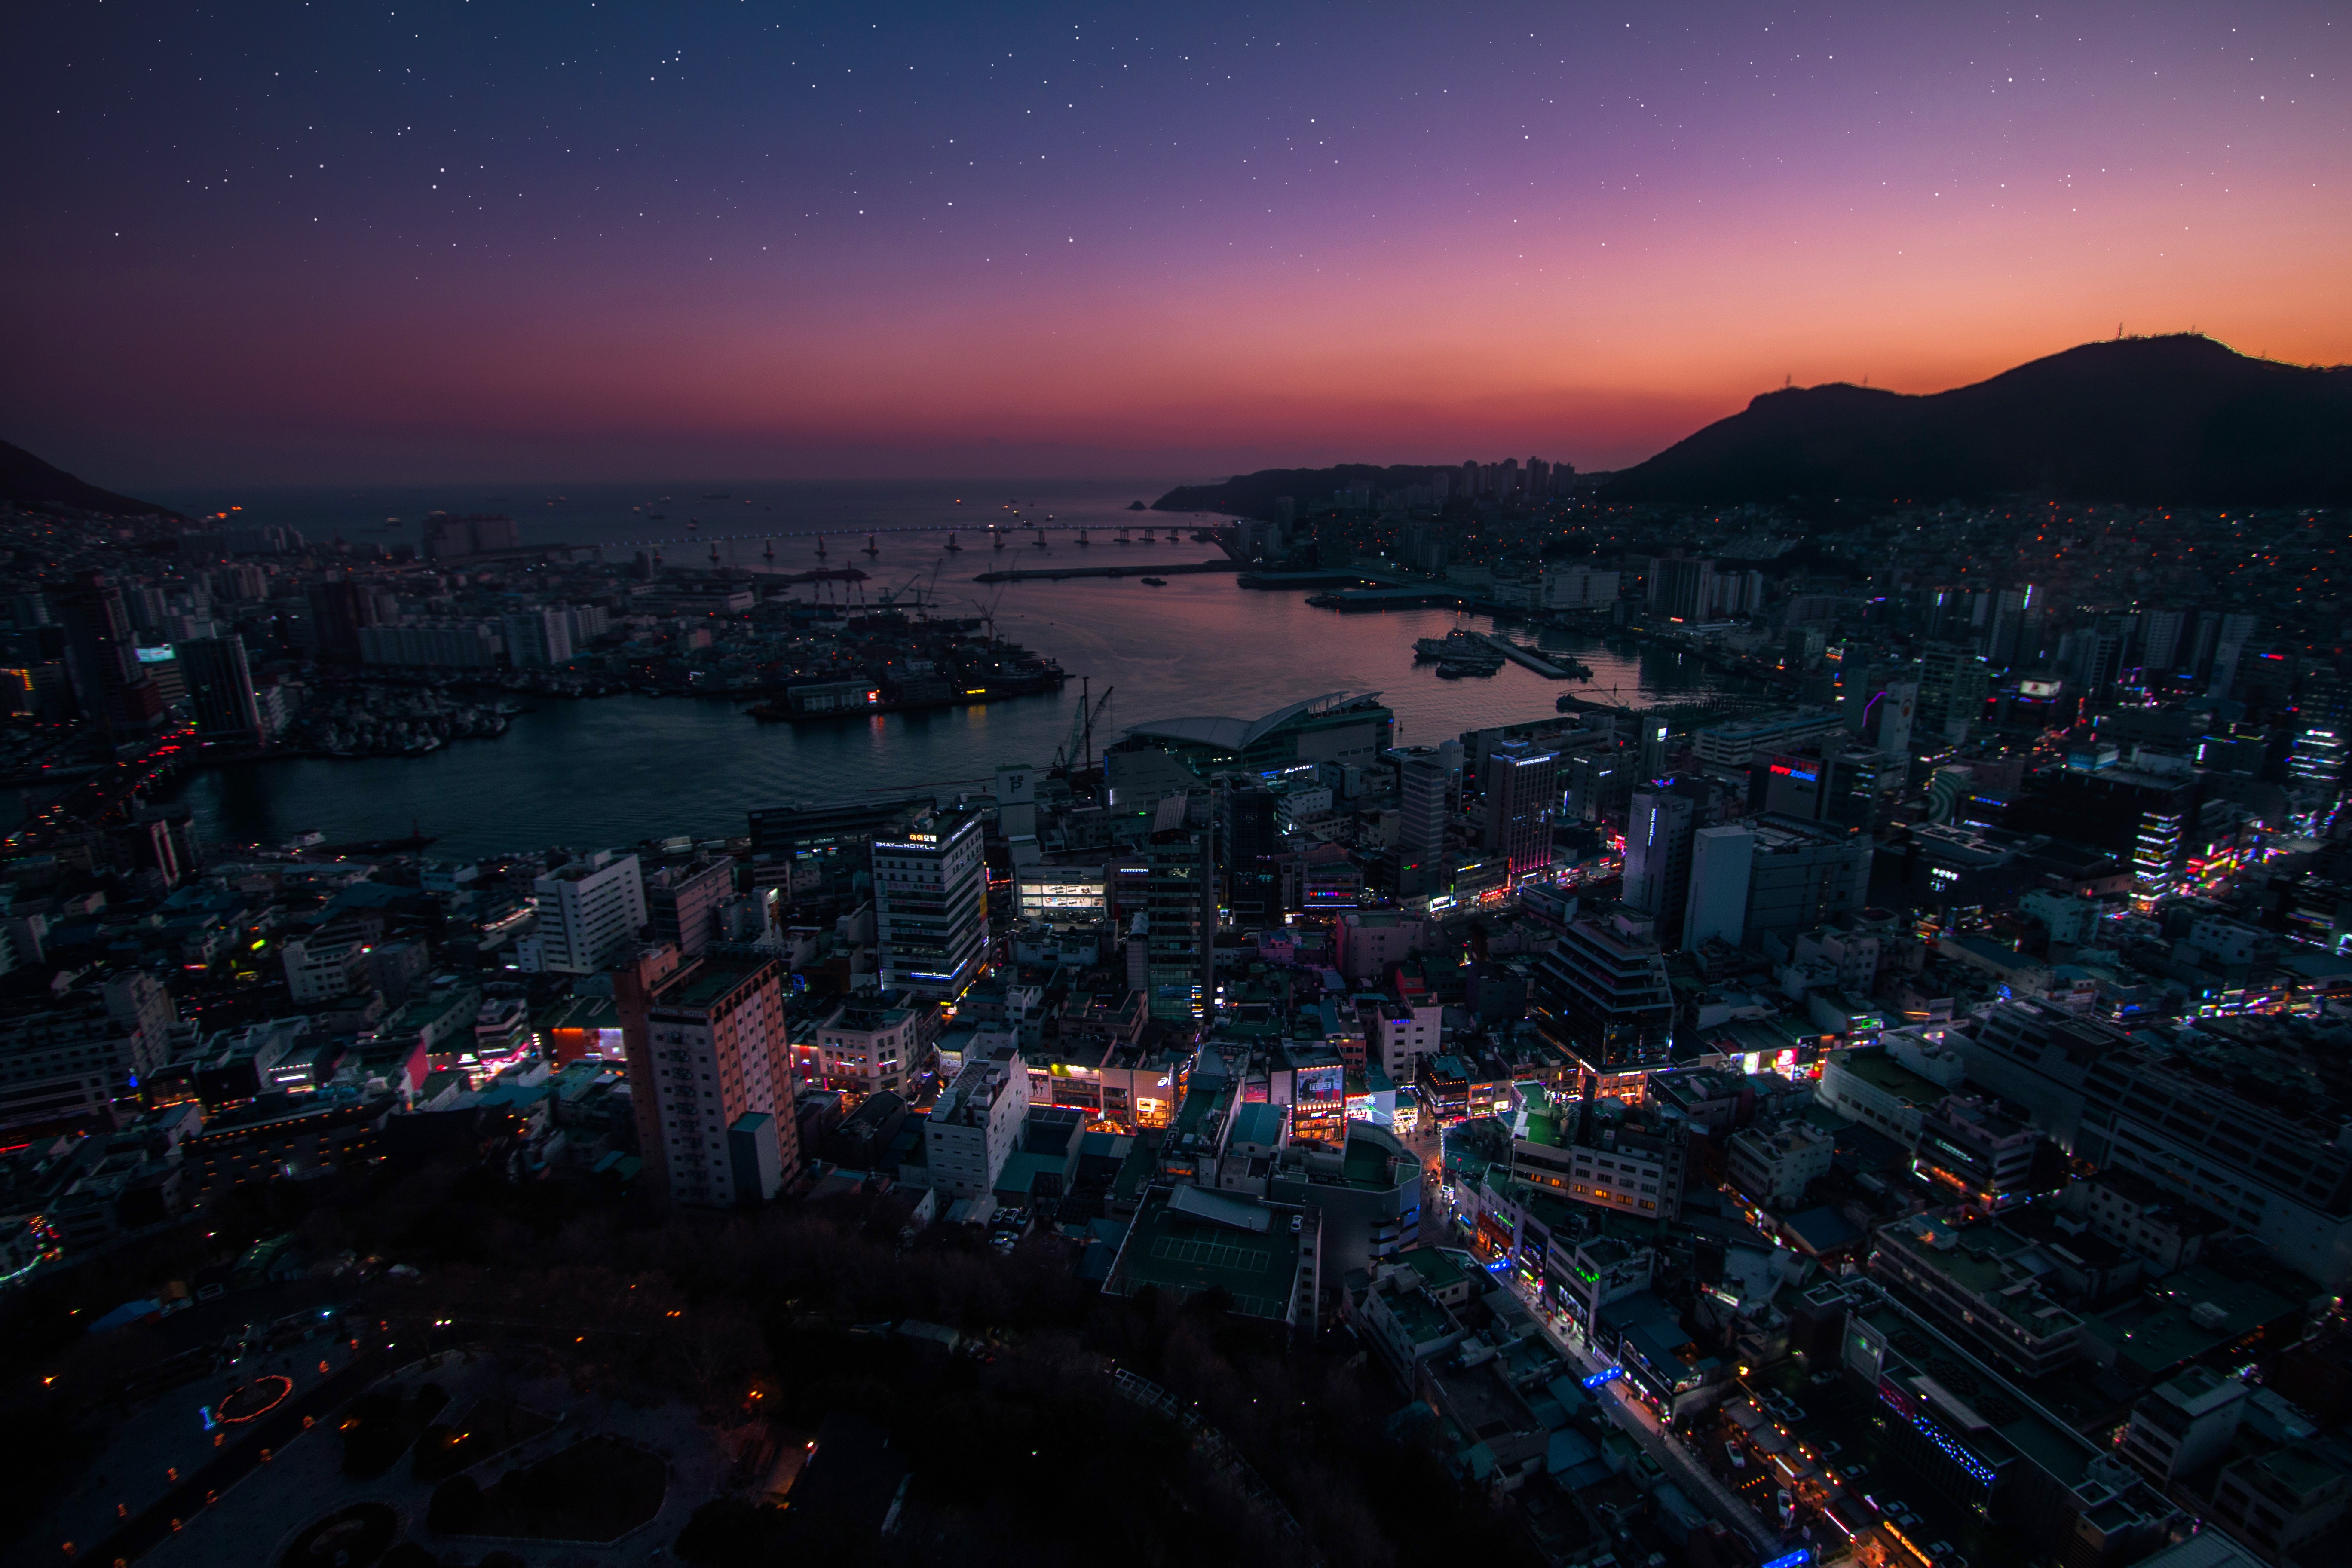 Night falls on Busan, South Korea by Pang Yuhao